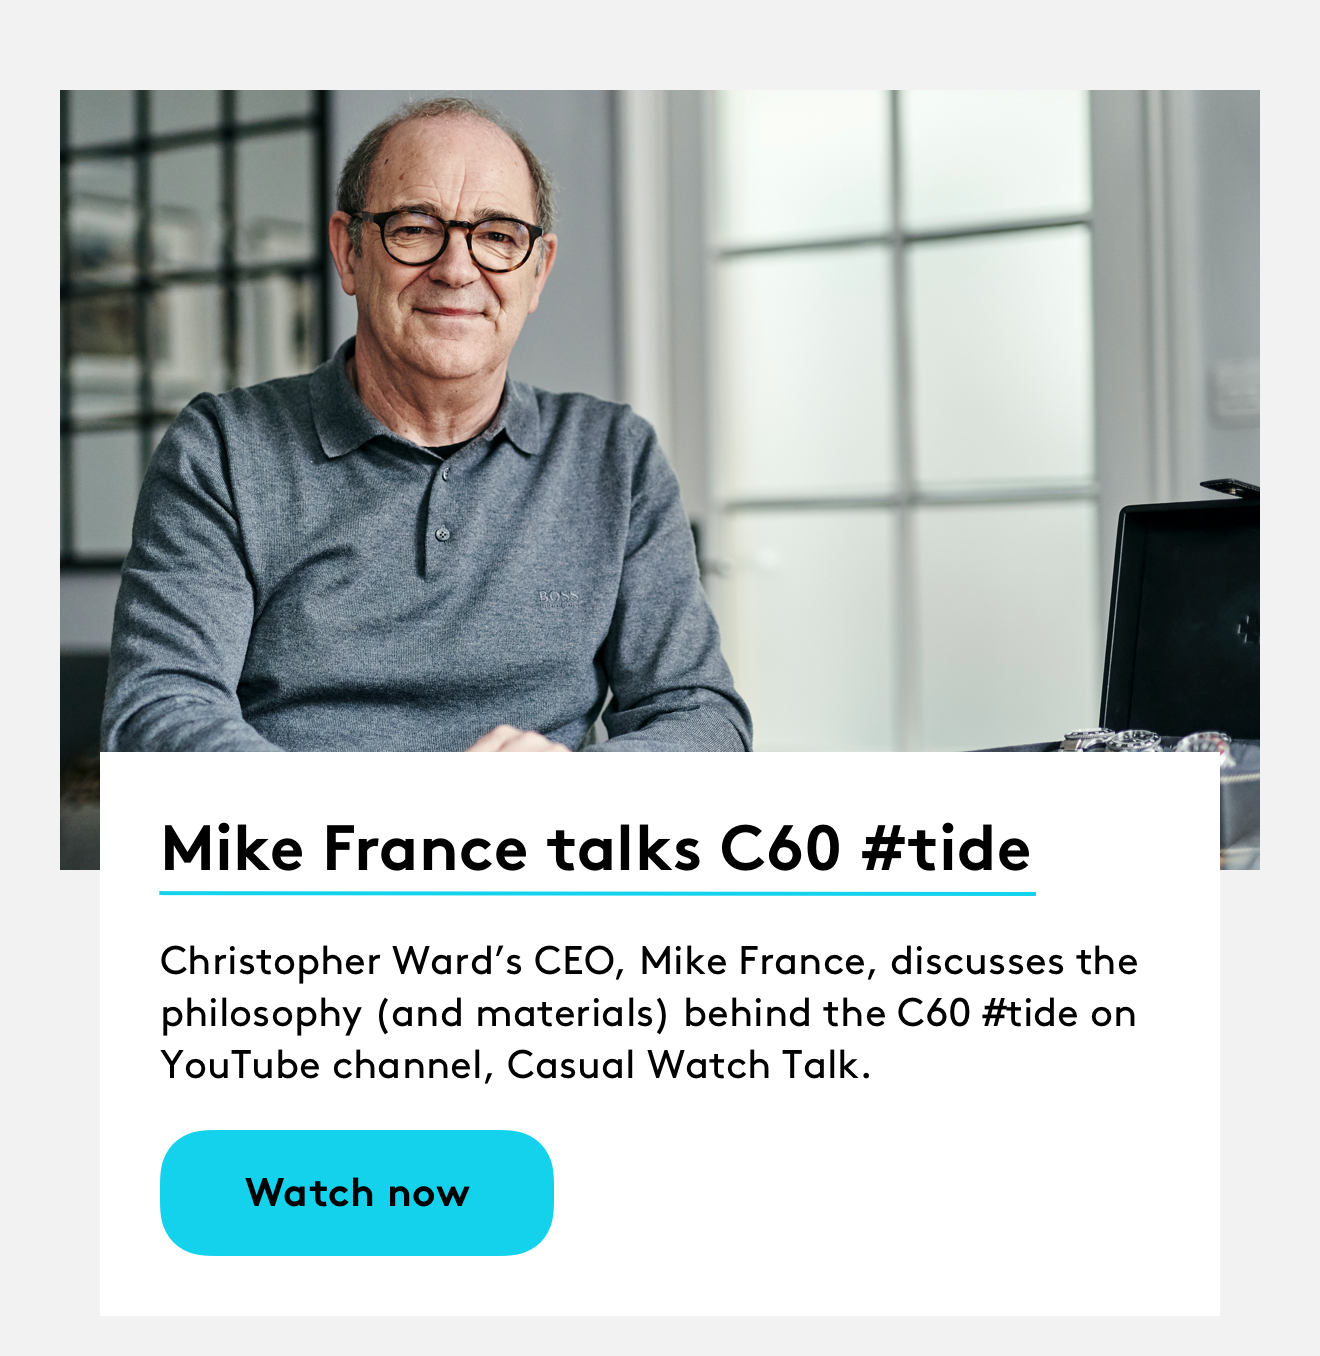 Mike France talks C60 #tide